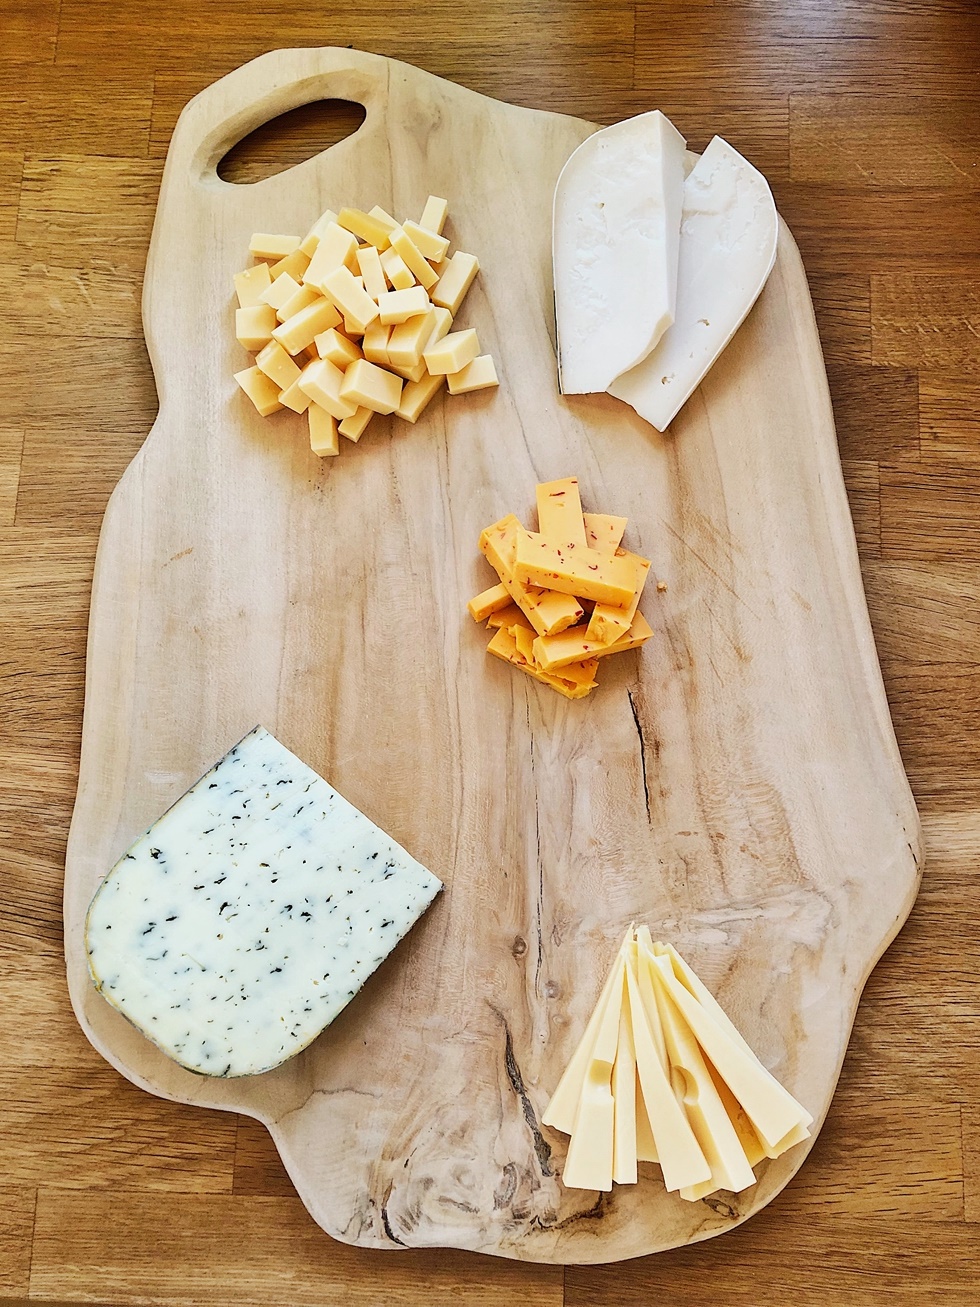 Charcuterie-Board-klassisches-Brotzeitbrettl-Cheese-Board-Snack-Plate-Brotzeitbrettl-Käse-Platte-brotzeit-antipasti-how-to-make-a-charcuterie-board-fashionkitchen